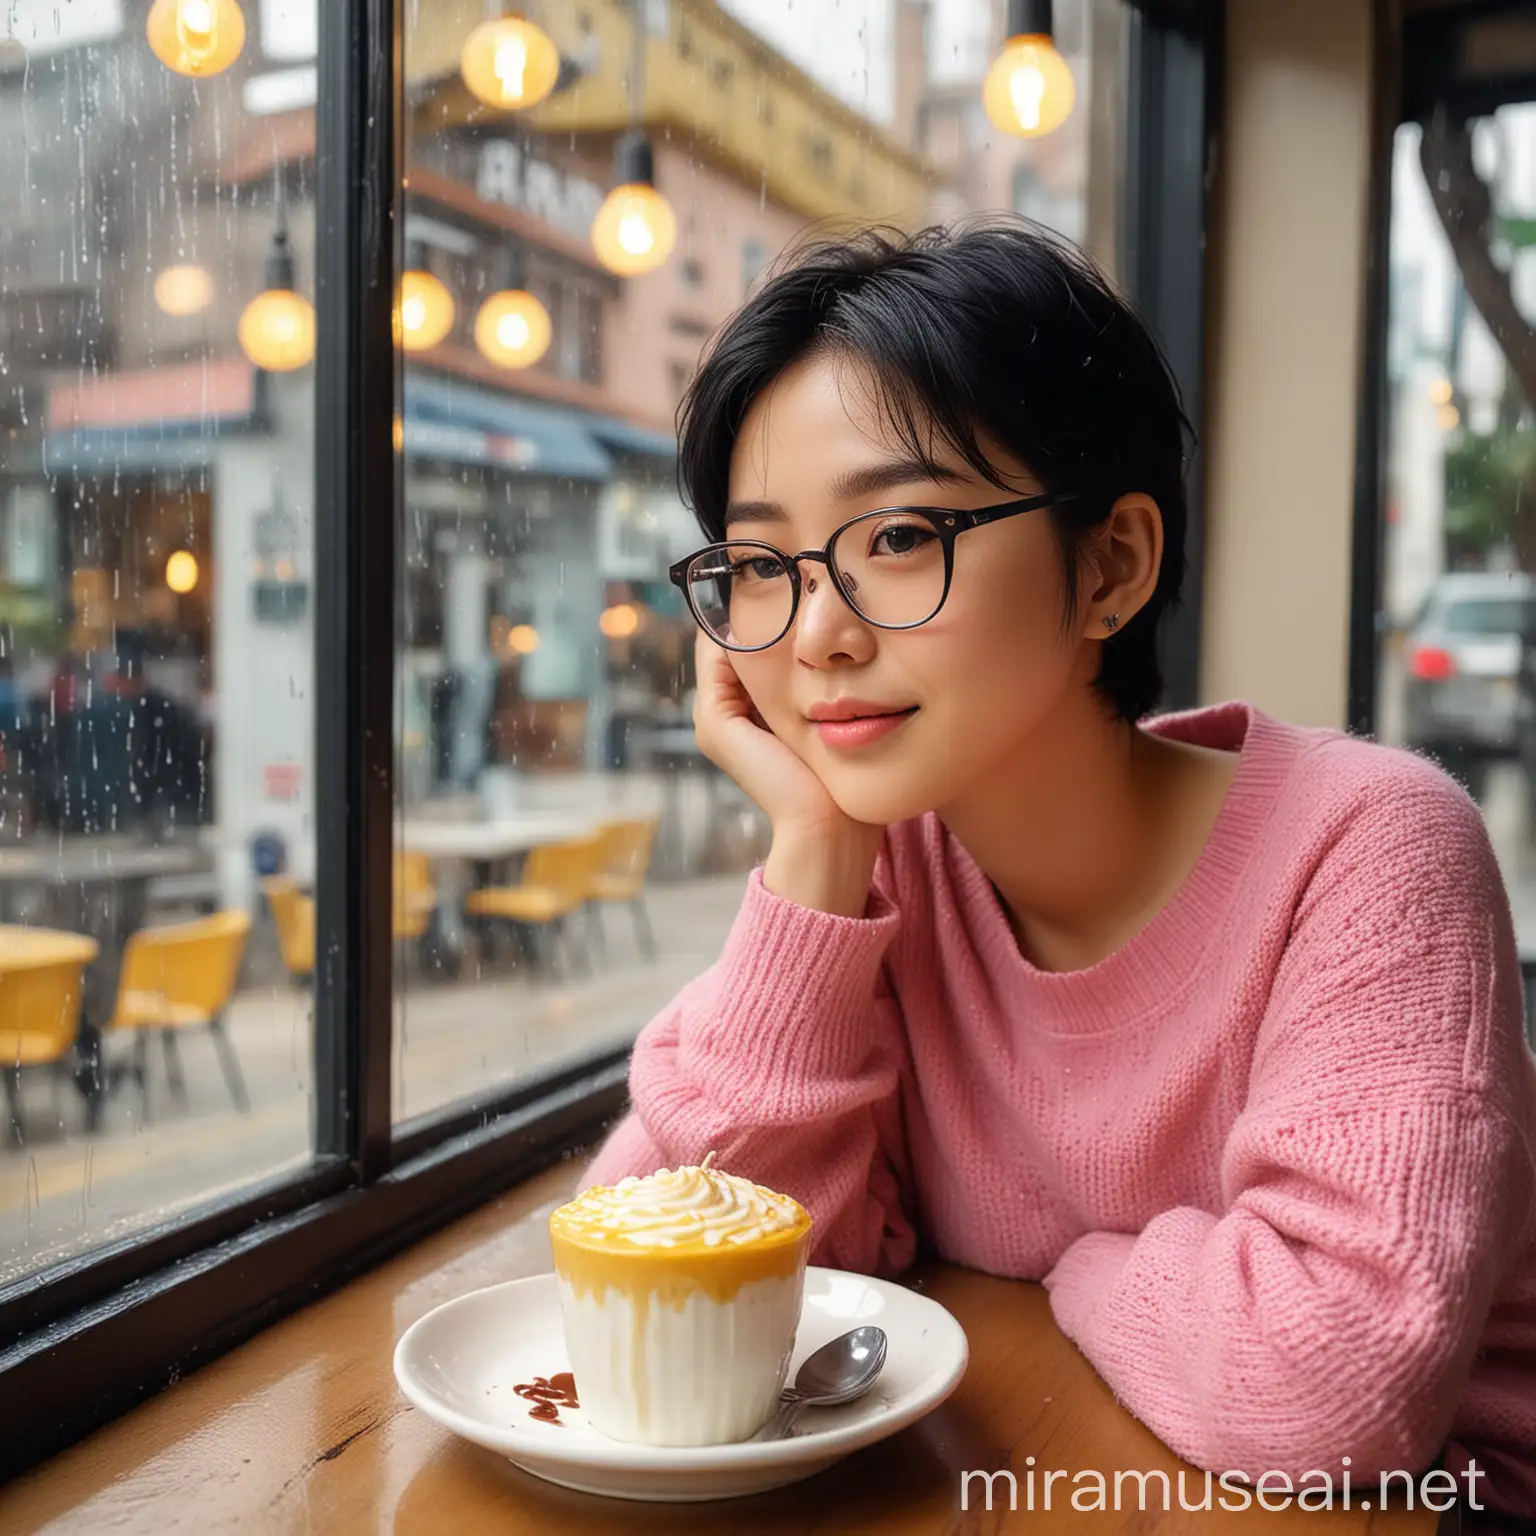 seorang wanita korea cantik berkaca mata, berambut hitam pendek,memakai swaeter merah muda,duduk di sebuah cafe,kopi di cangkir dan kue di piring kecil,di sebelah jendela kaca besar yang ber embun,hujan di luar rintik rintik,pagi hari,lampu cafe kuning,foto diambil dari sudut samping